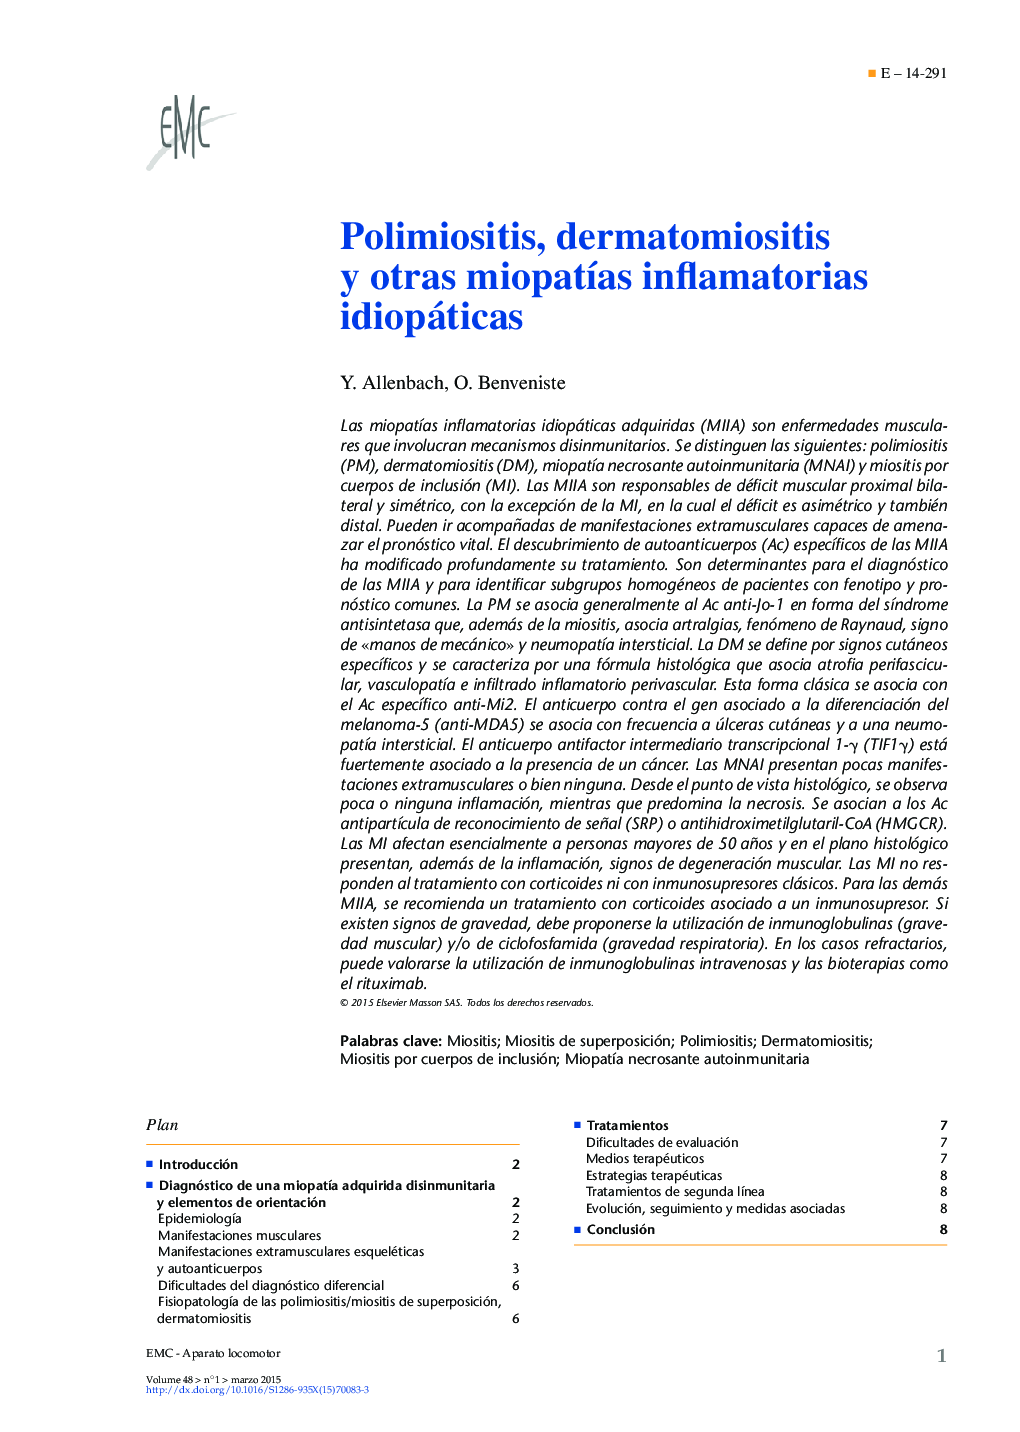 Polimiositis, dermatomiositis y otras miopatías inflamatorias idiopáticas